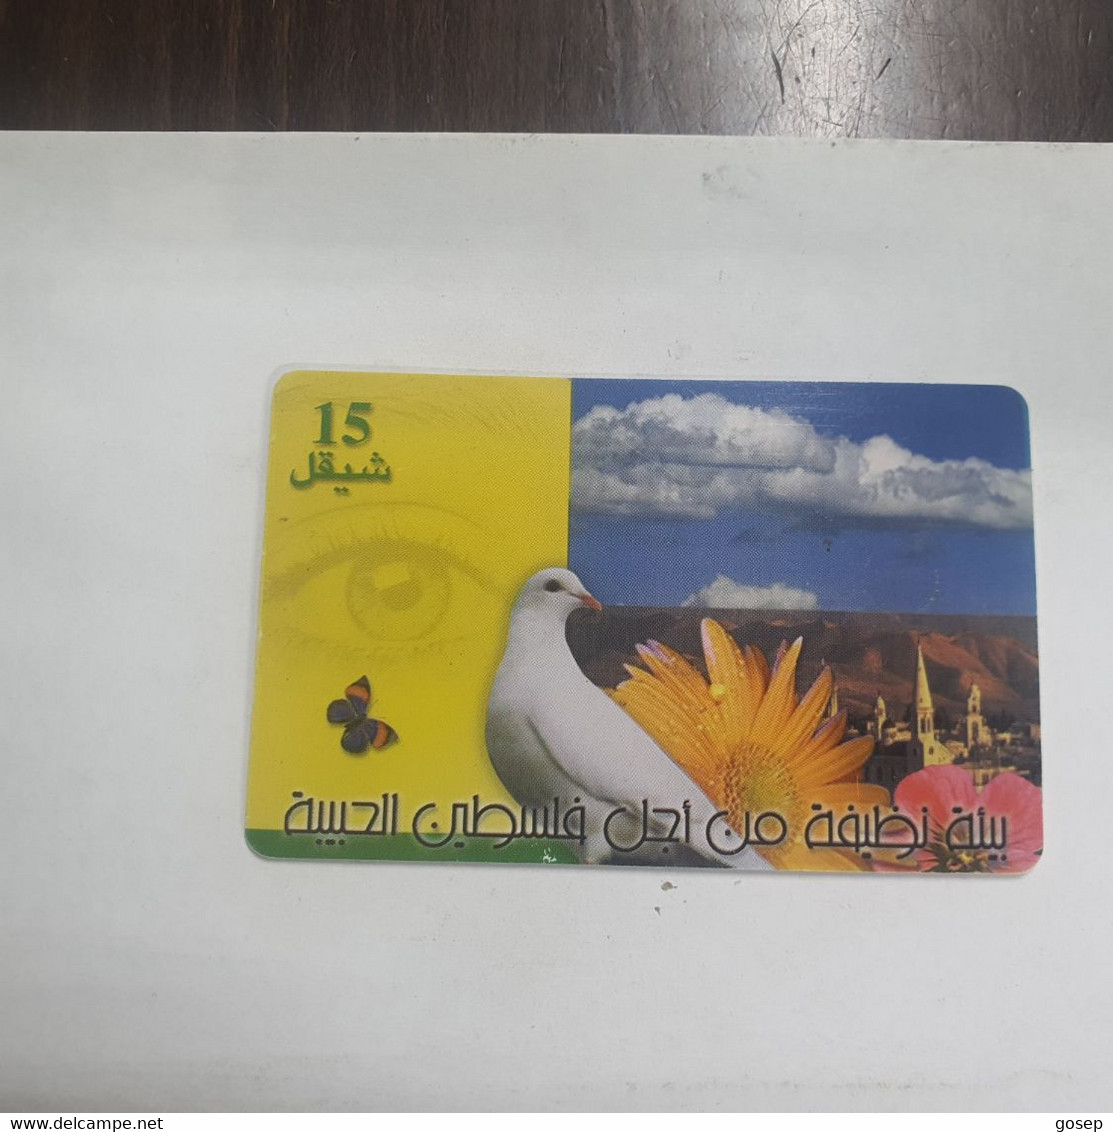 Plastine-(PS-PAL-0012D)-Keep Palestine Clean-Dove-(544)-(8/2000)(15₪)(0033-022942)-used Card+1card Prepiad Free - Palestina